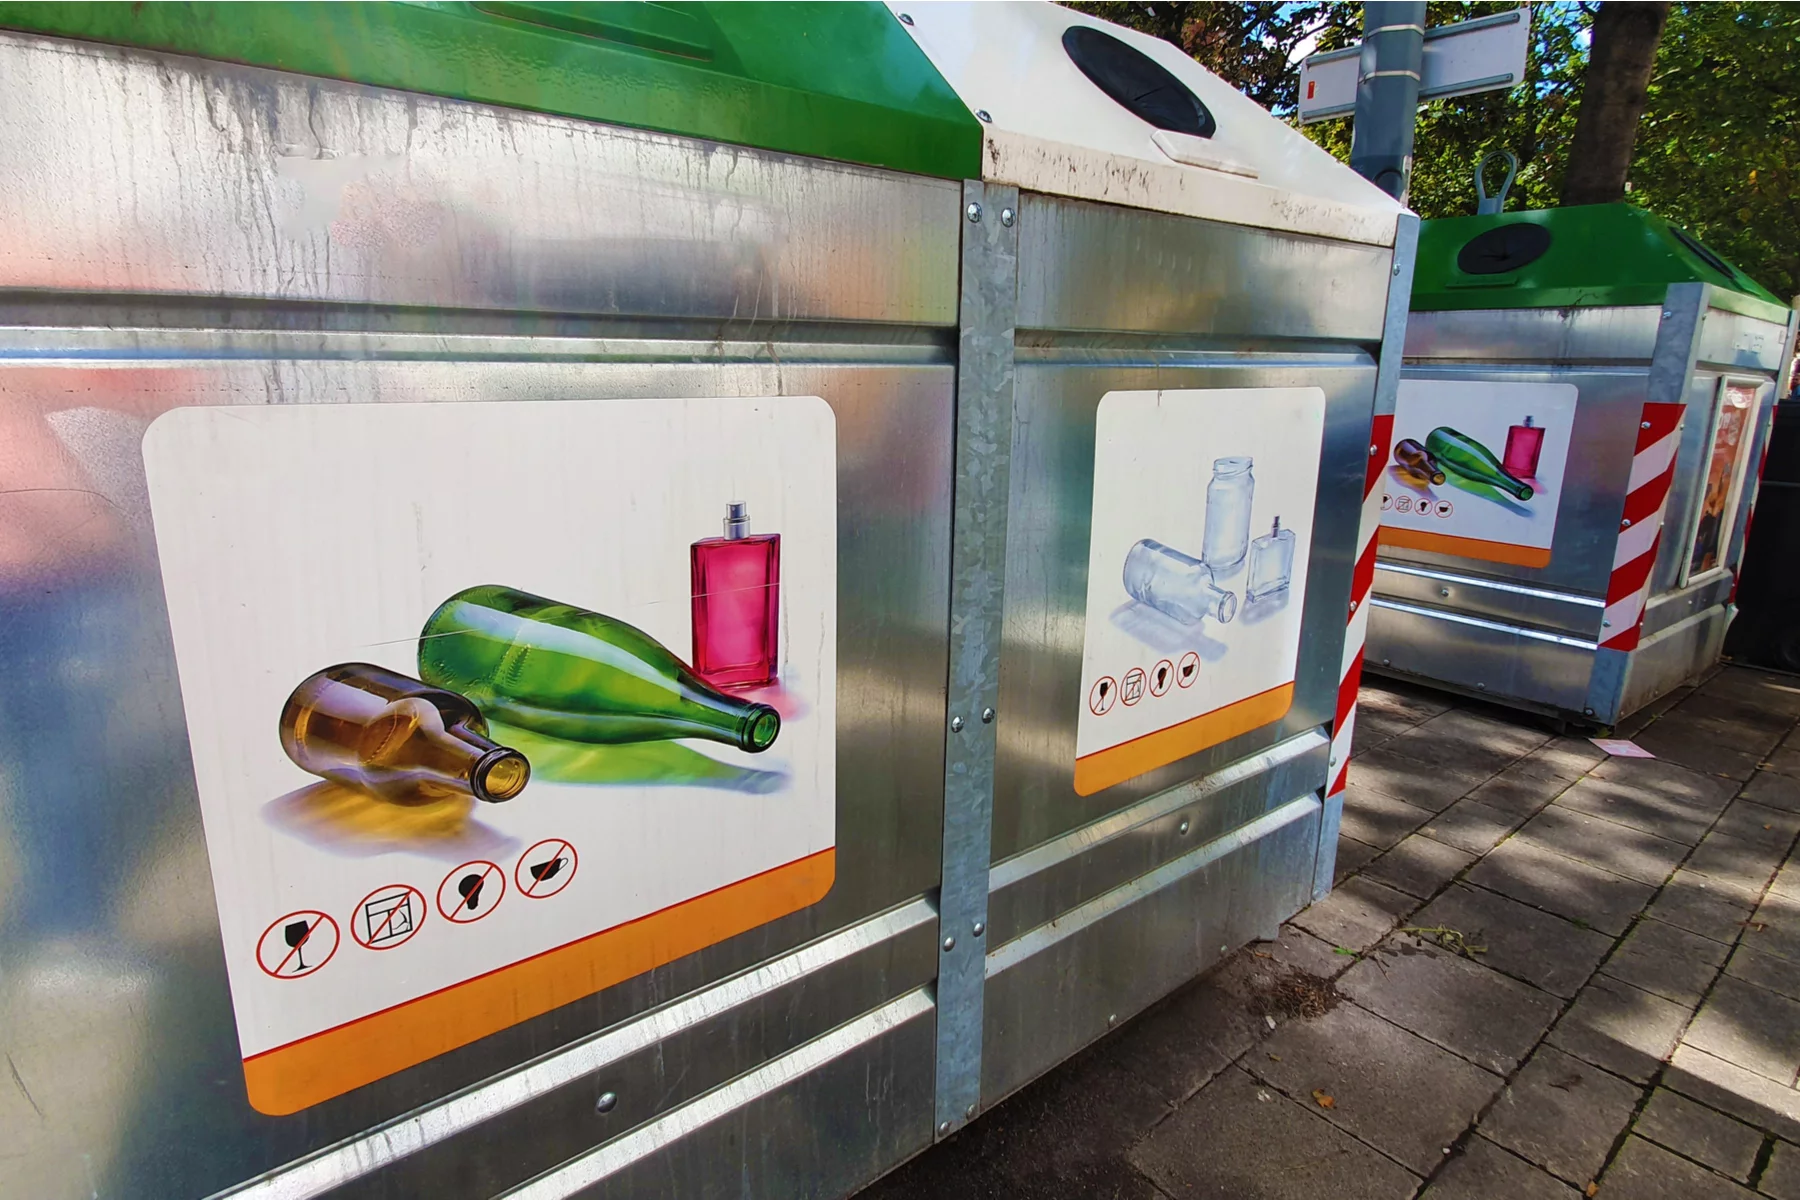 Recycling bins in Vienna